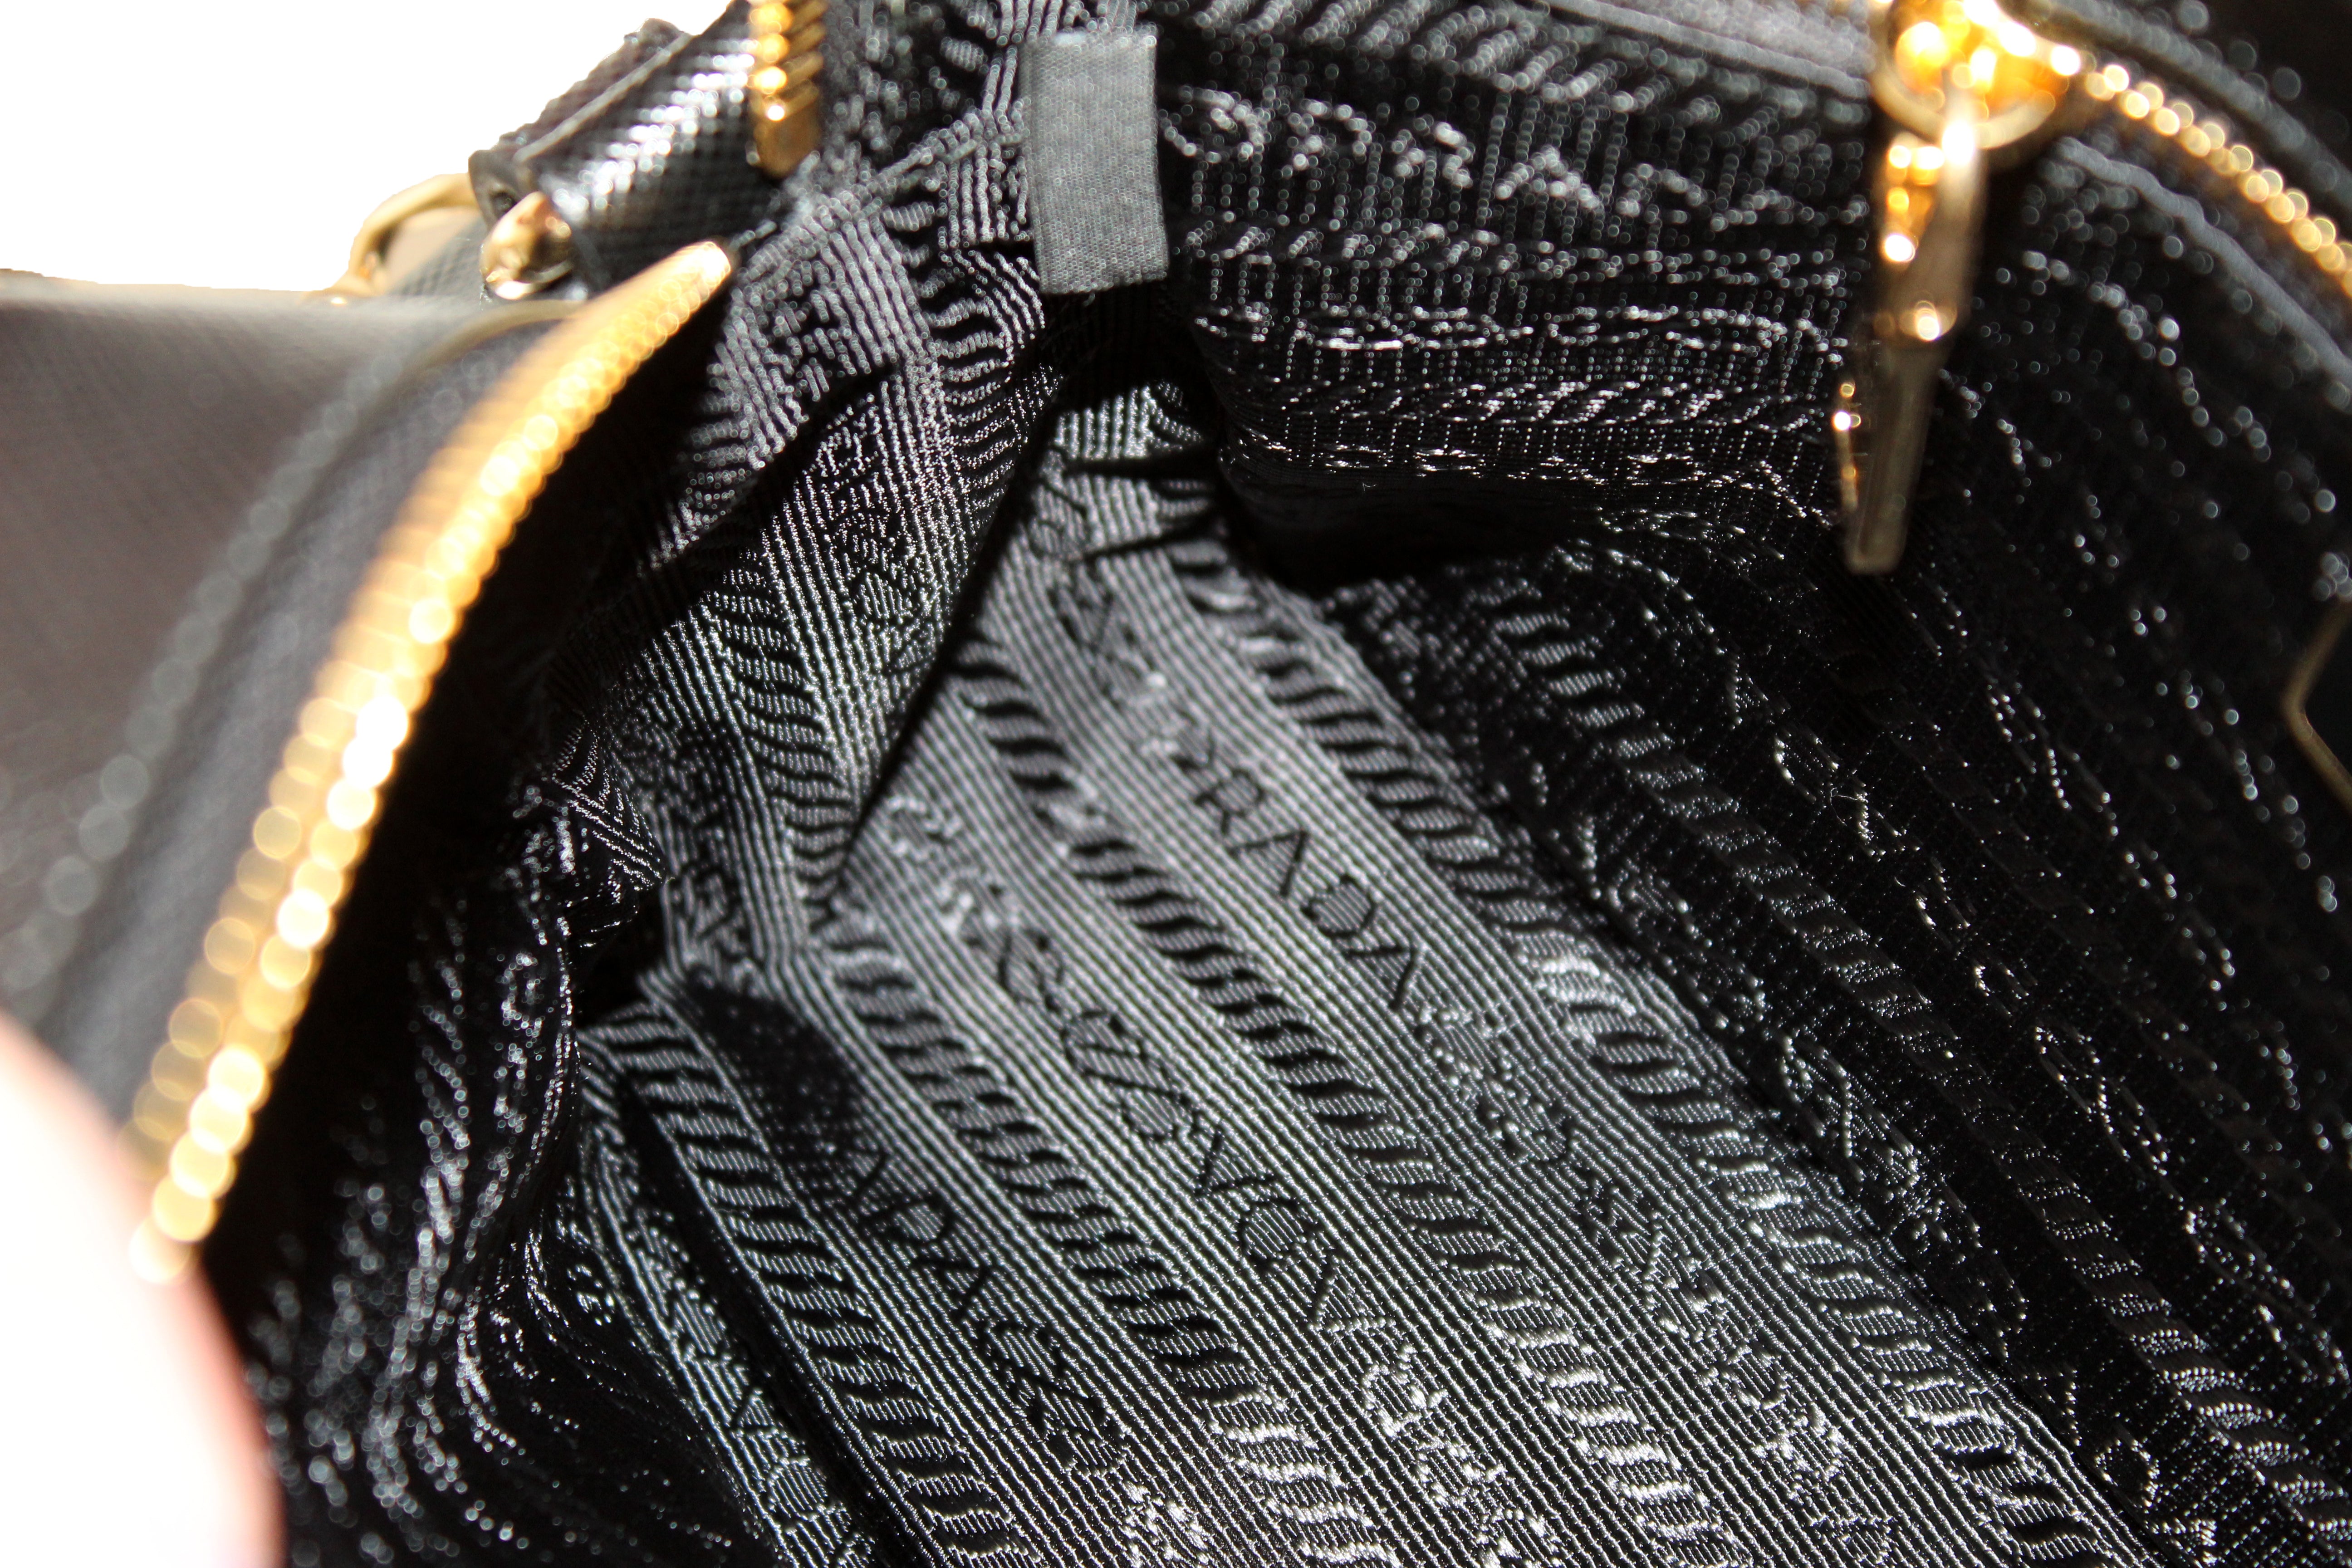 Prada Saffiano Lux Leather Chain Bandoliera Crossbody Bag, Prada Handbags